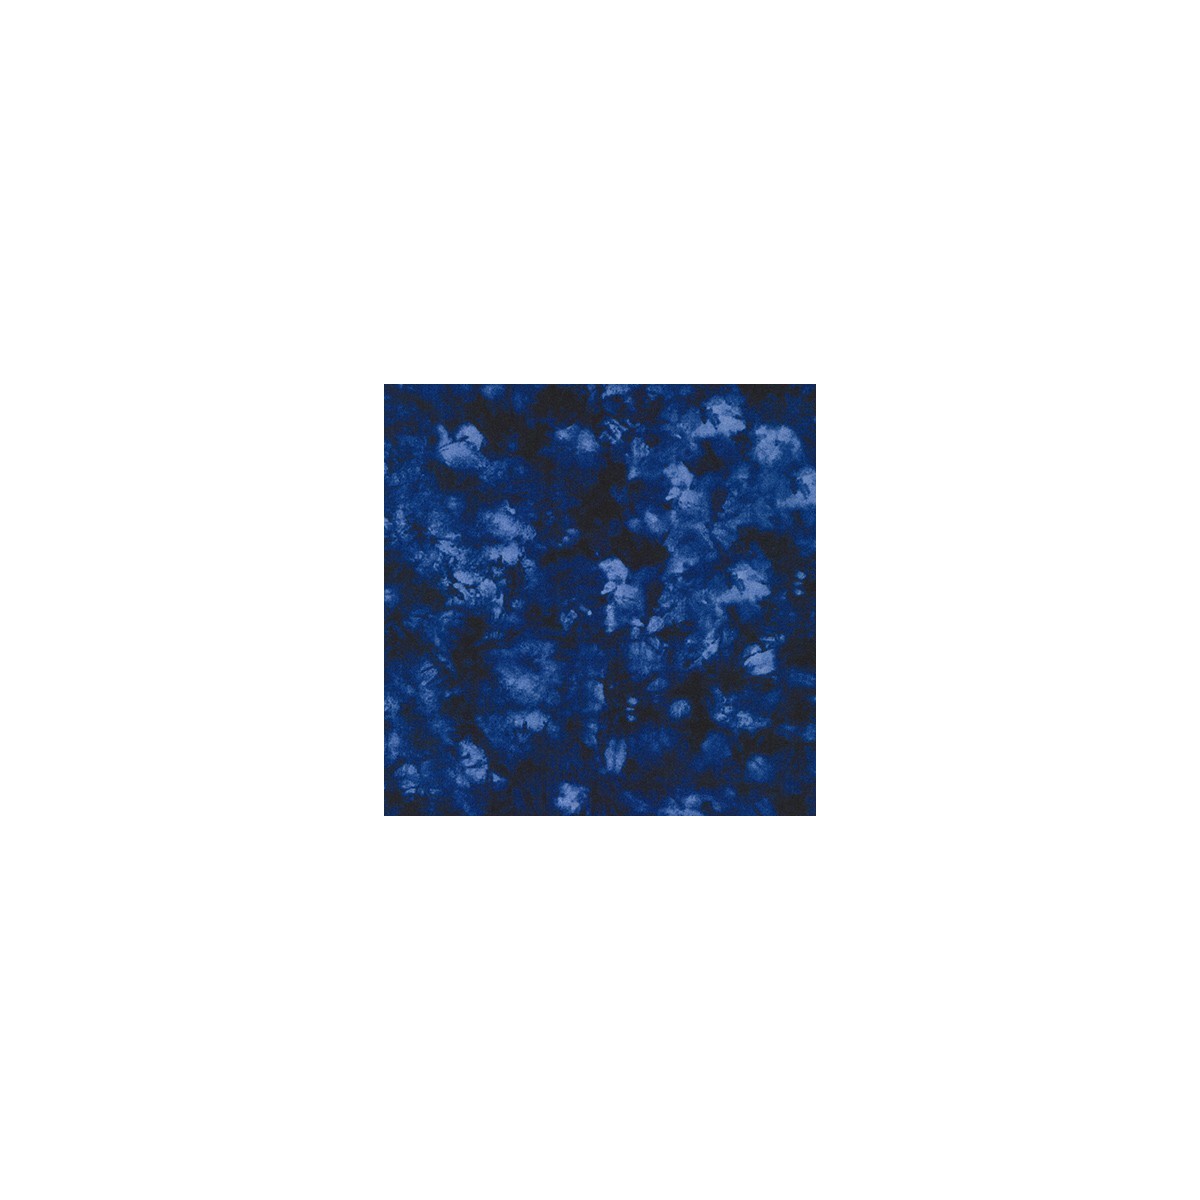 P135-SB-850257D6-1 PATCH. AMERICANO SHIBORI BLUES (20) 110 CM. ALG 100% NAVY VENTA EN PZAS. DE 7 M APRO